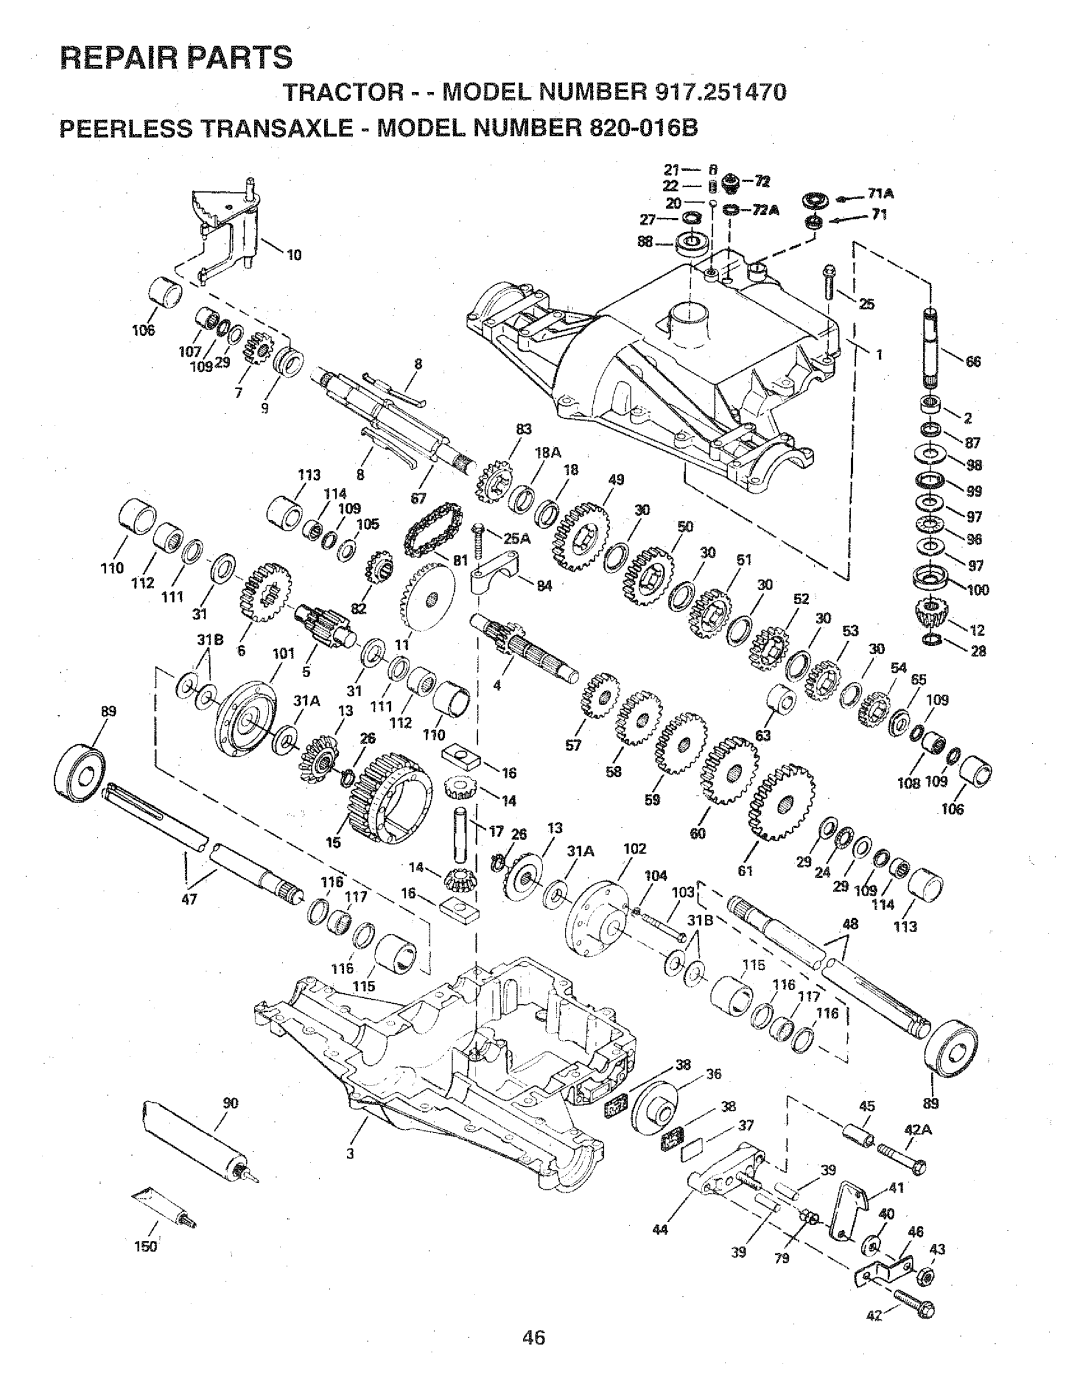 Sears 917.25147 PEERLESS TRANSAXLE - MODEL NUMBER 820-016B, Repair Parts, Tractor - - Model Number, J , 1o, b...\..7 